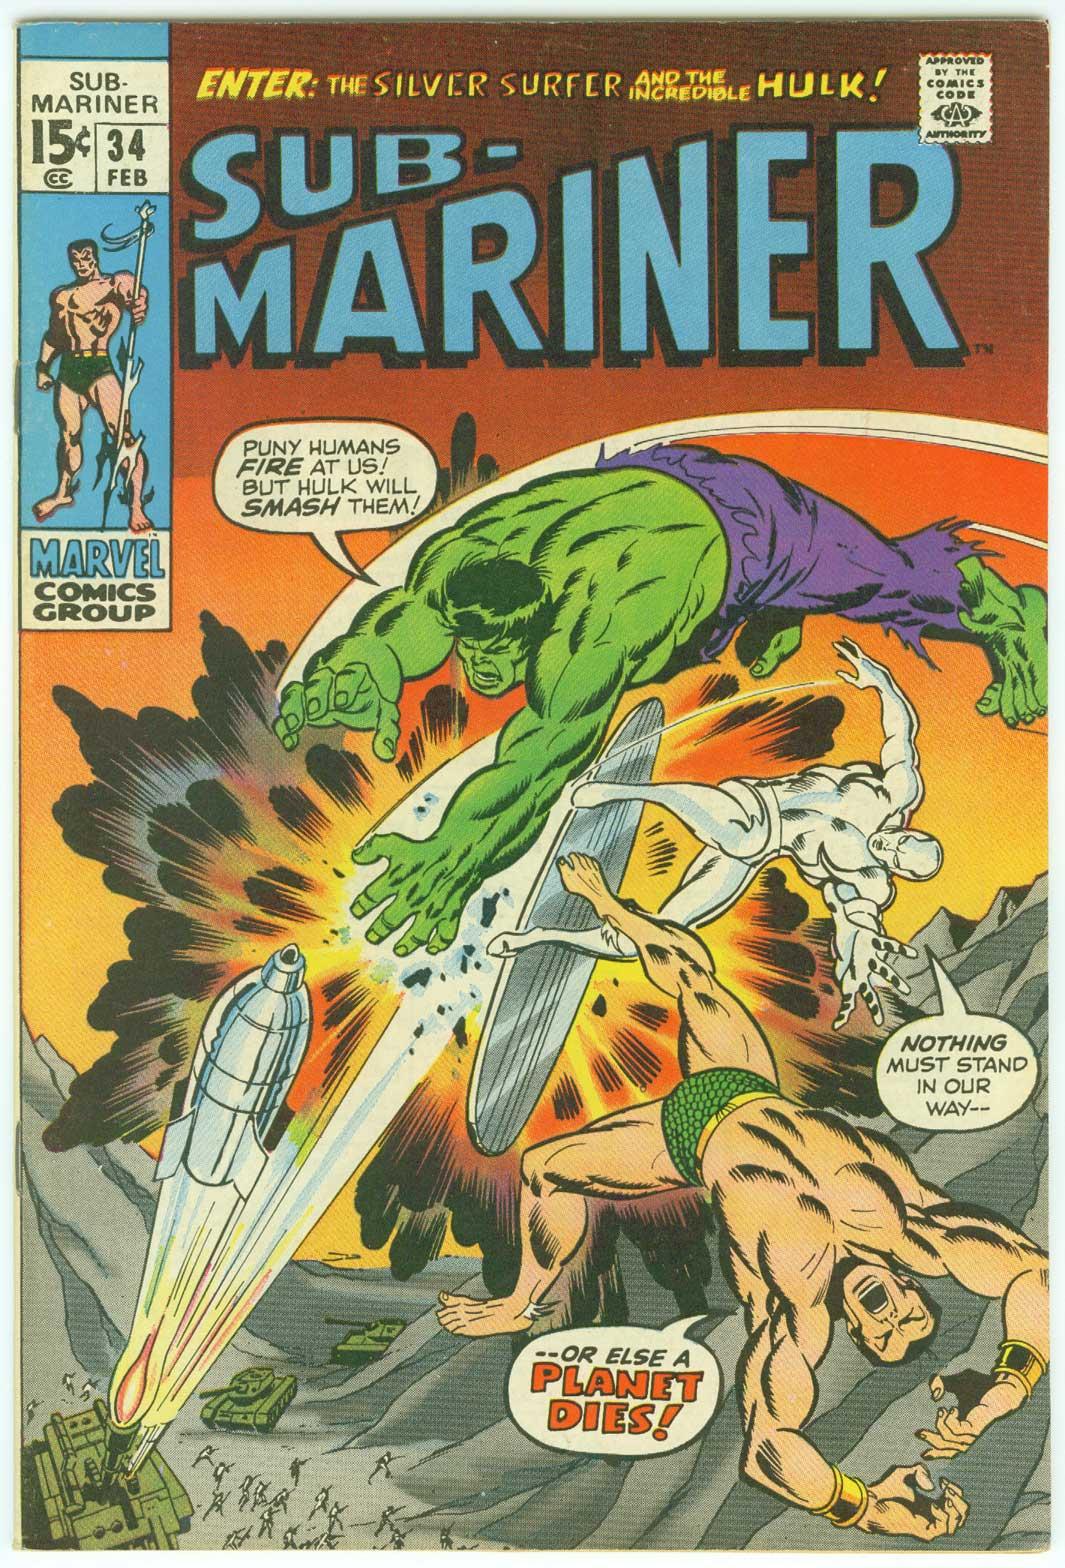 Sub-Mariner Vol. 1 #34